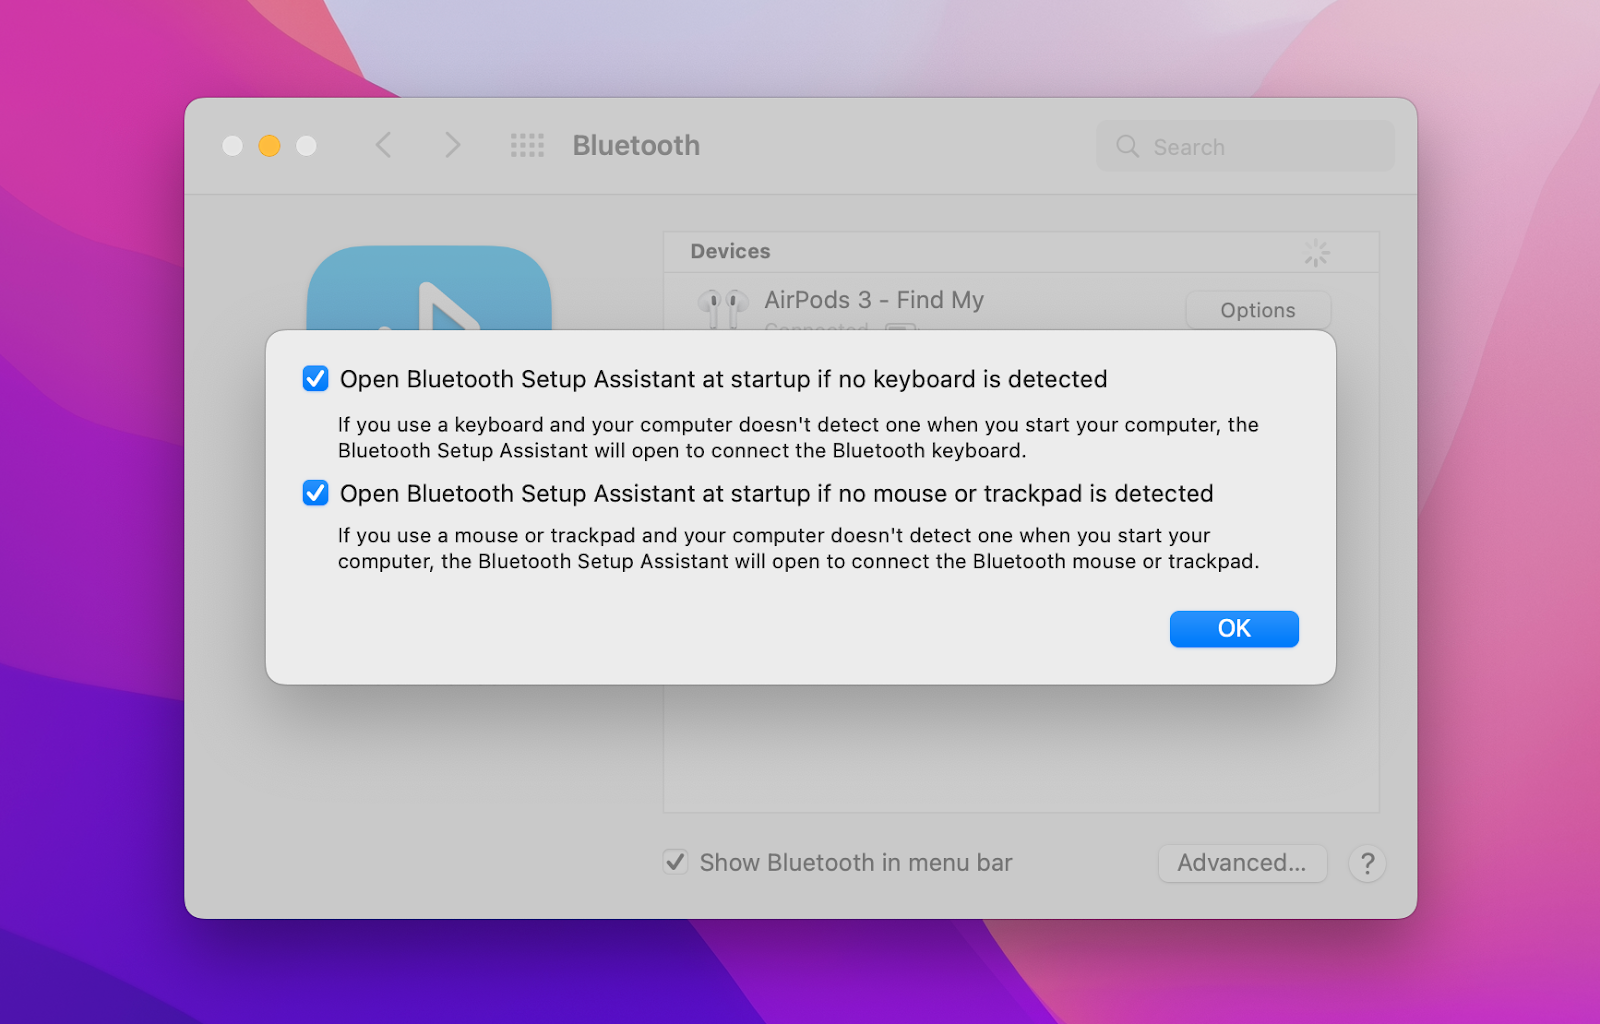 Open Bluetooth Setup Assistant